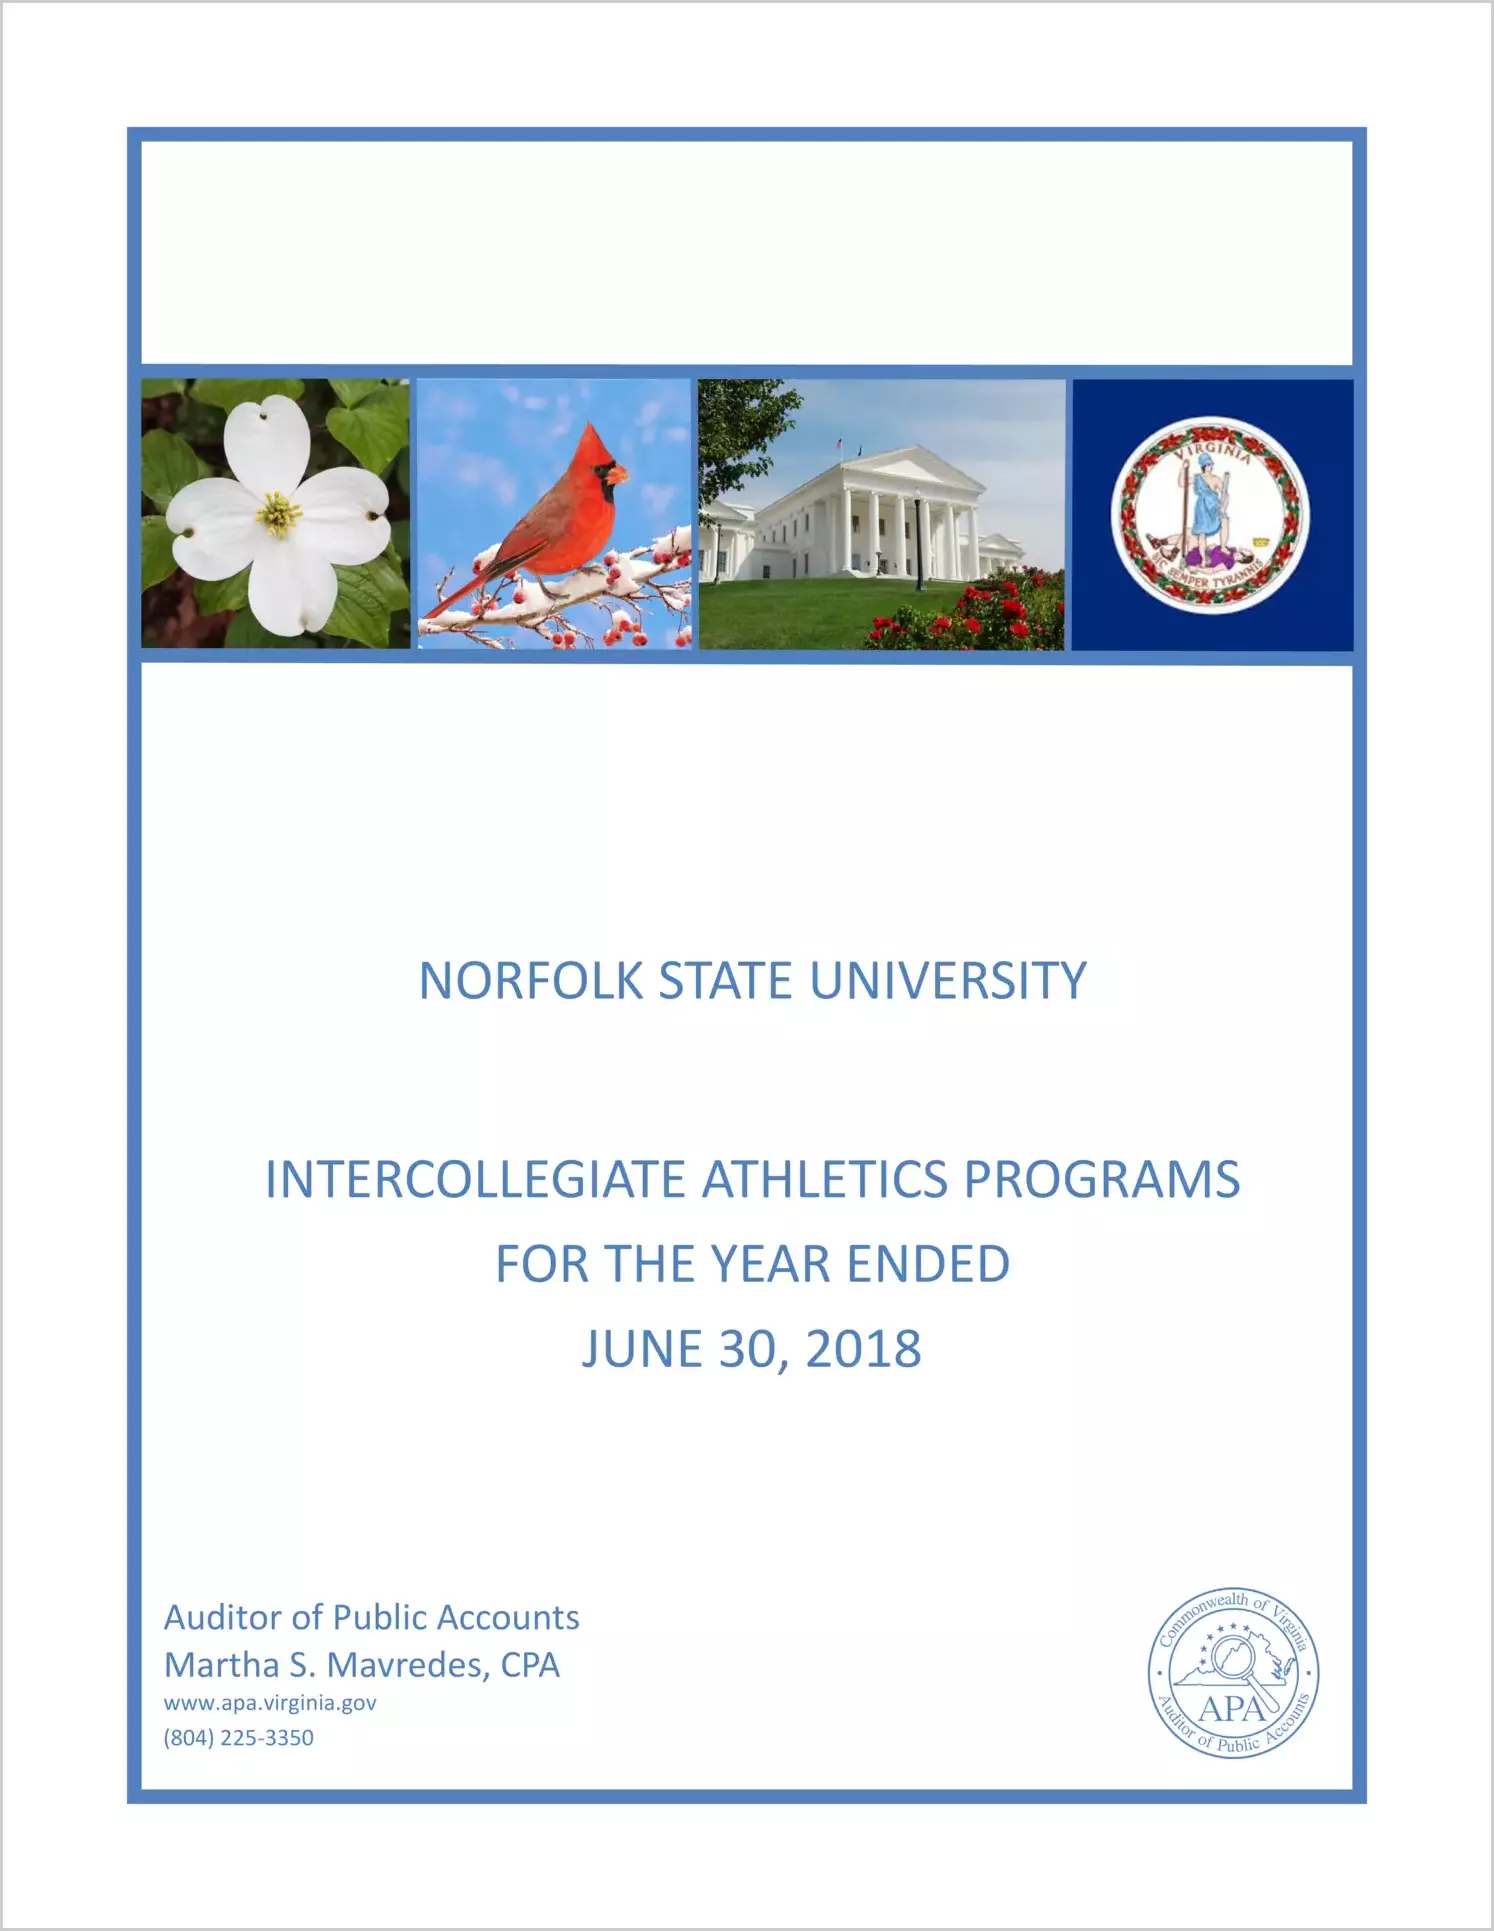 Norfolk State University Intercollegiate Athletics Programs for the year ended June 30, 2018